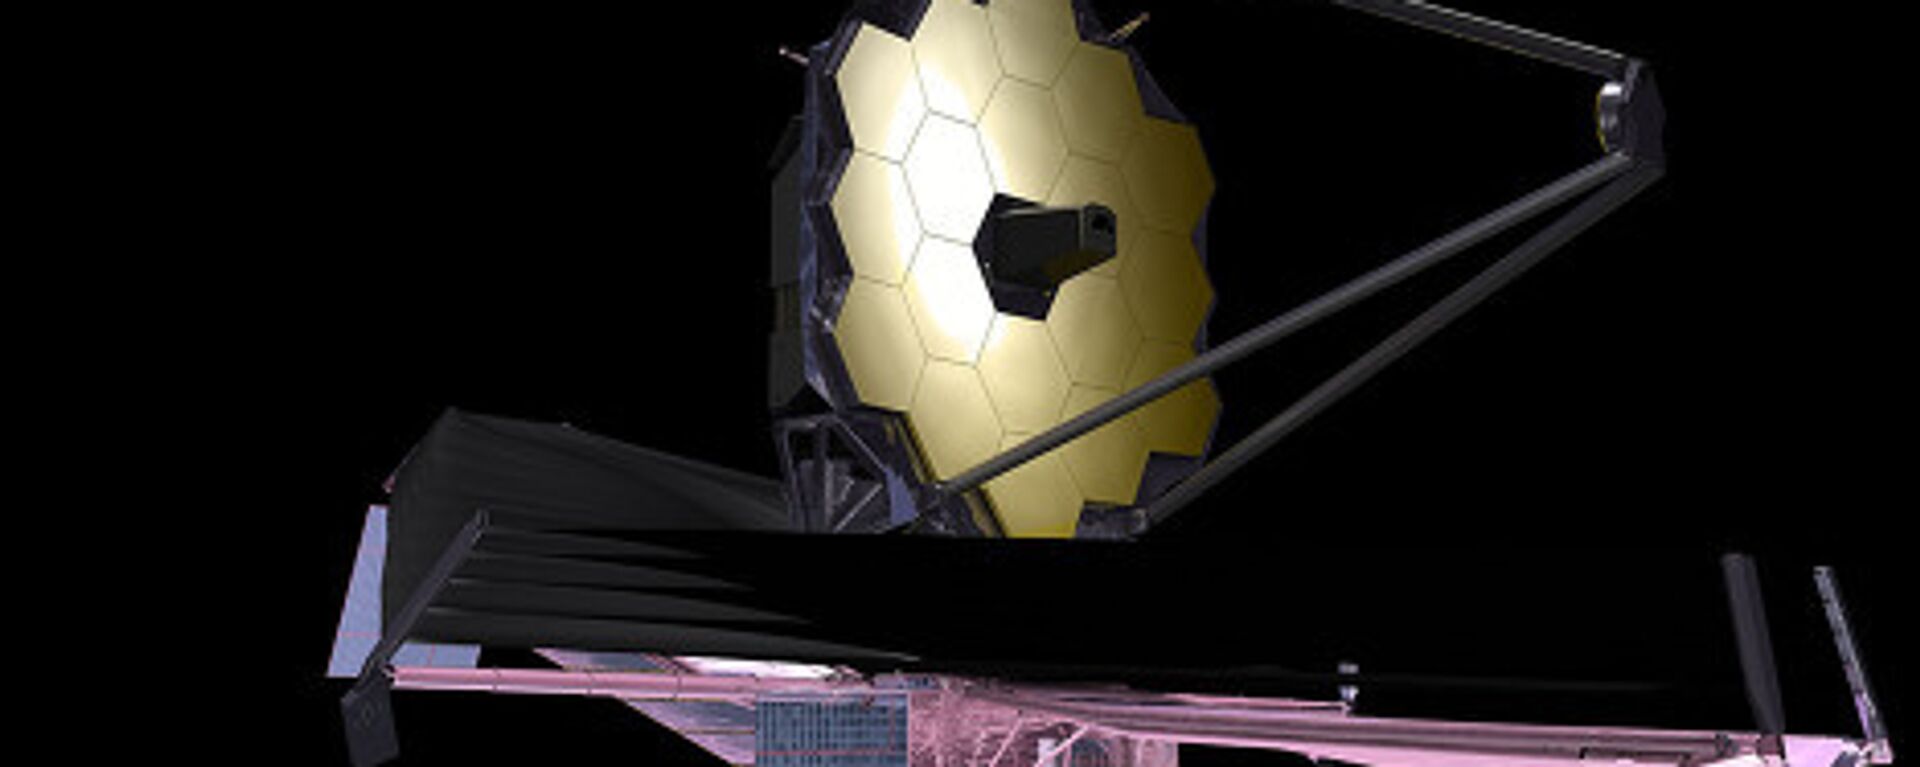 James Webb space telescope to replace Hubble  - Sputnik International, 1920, 26.08.2022